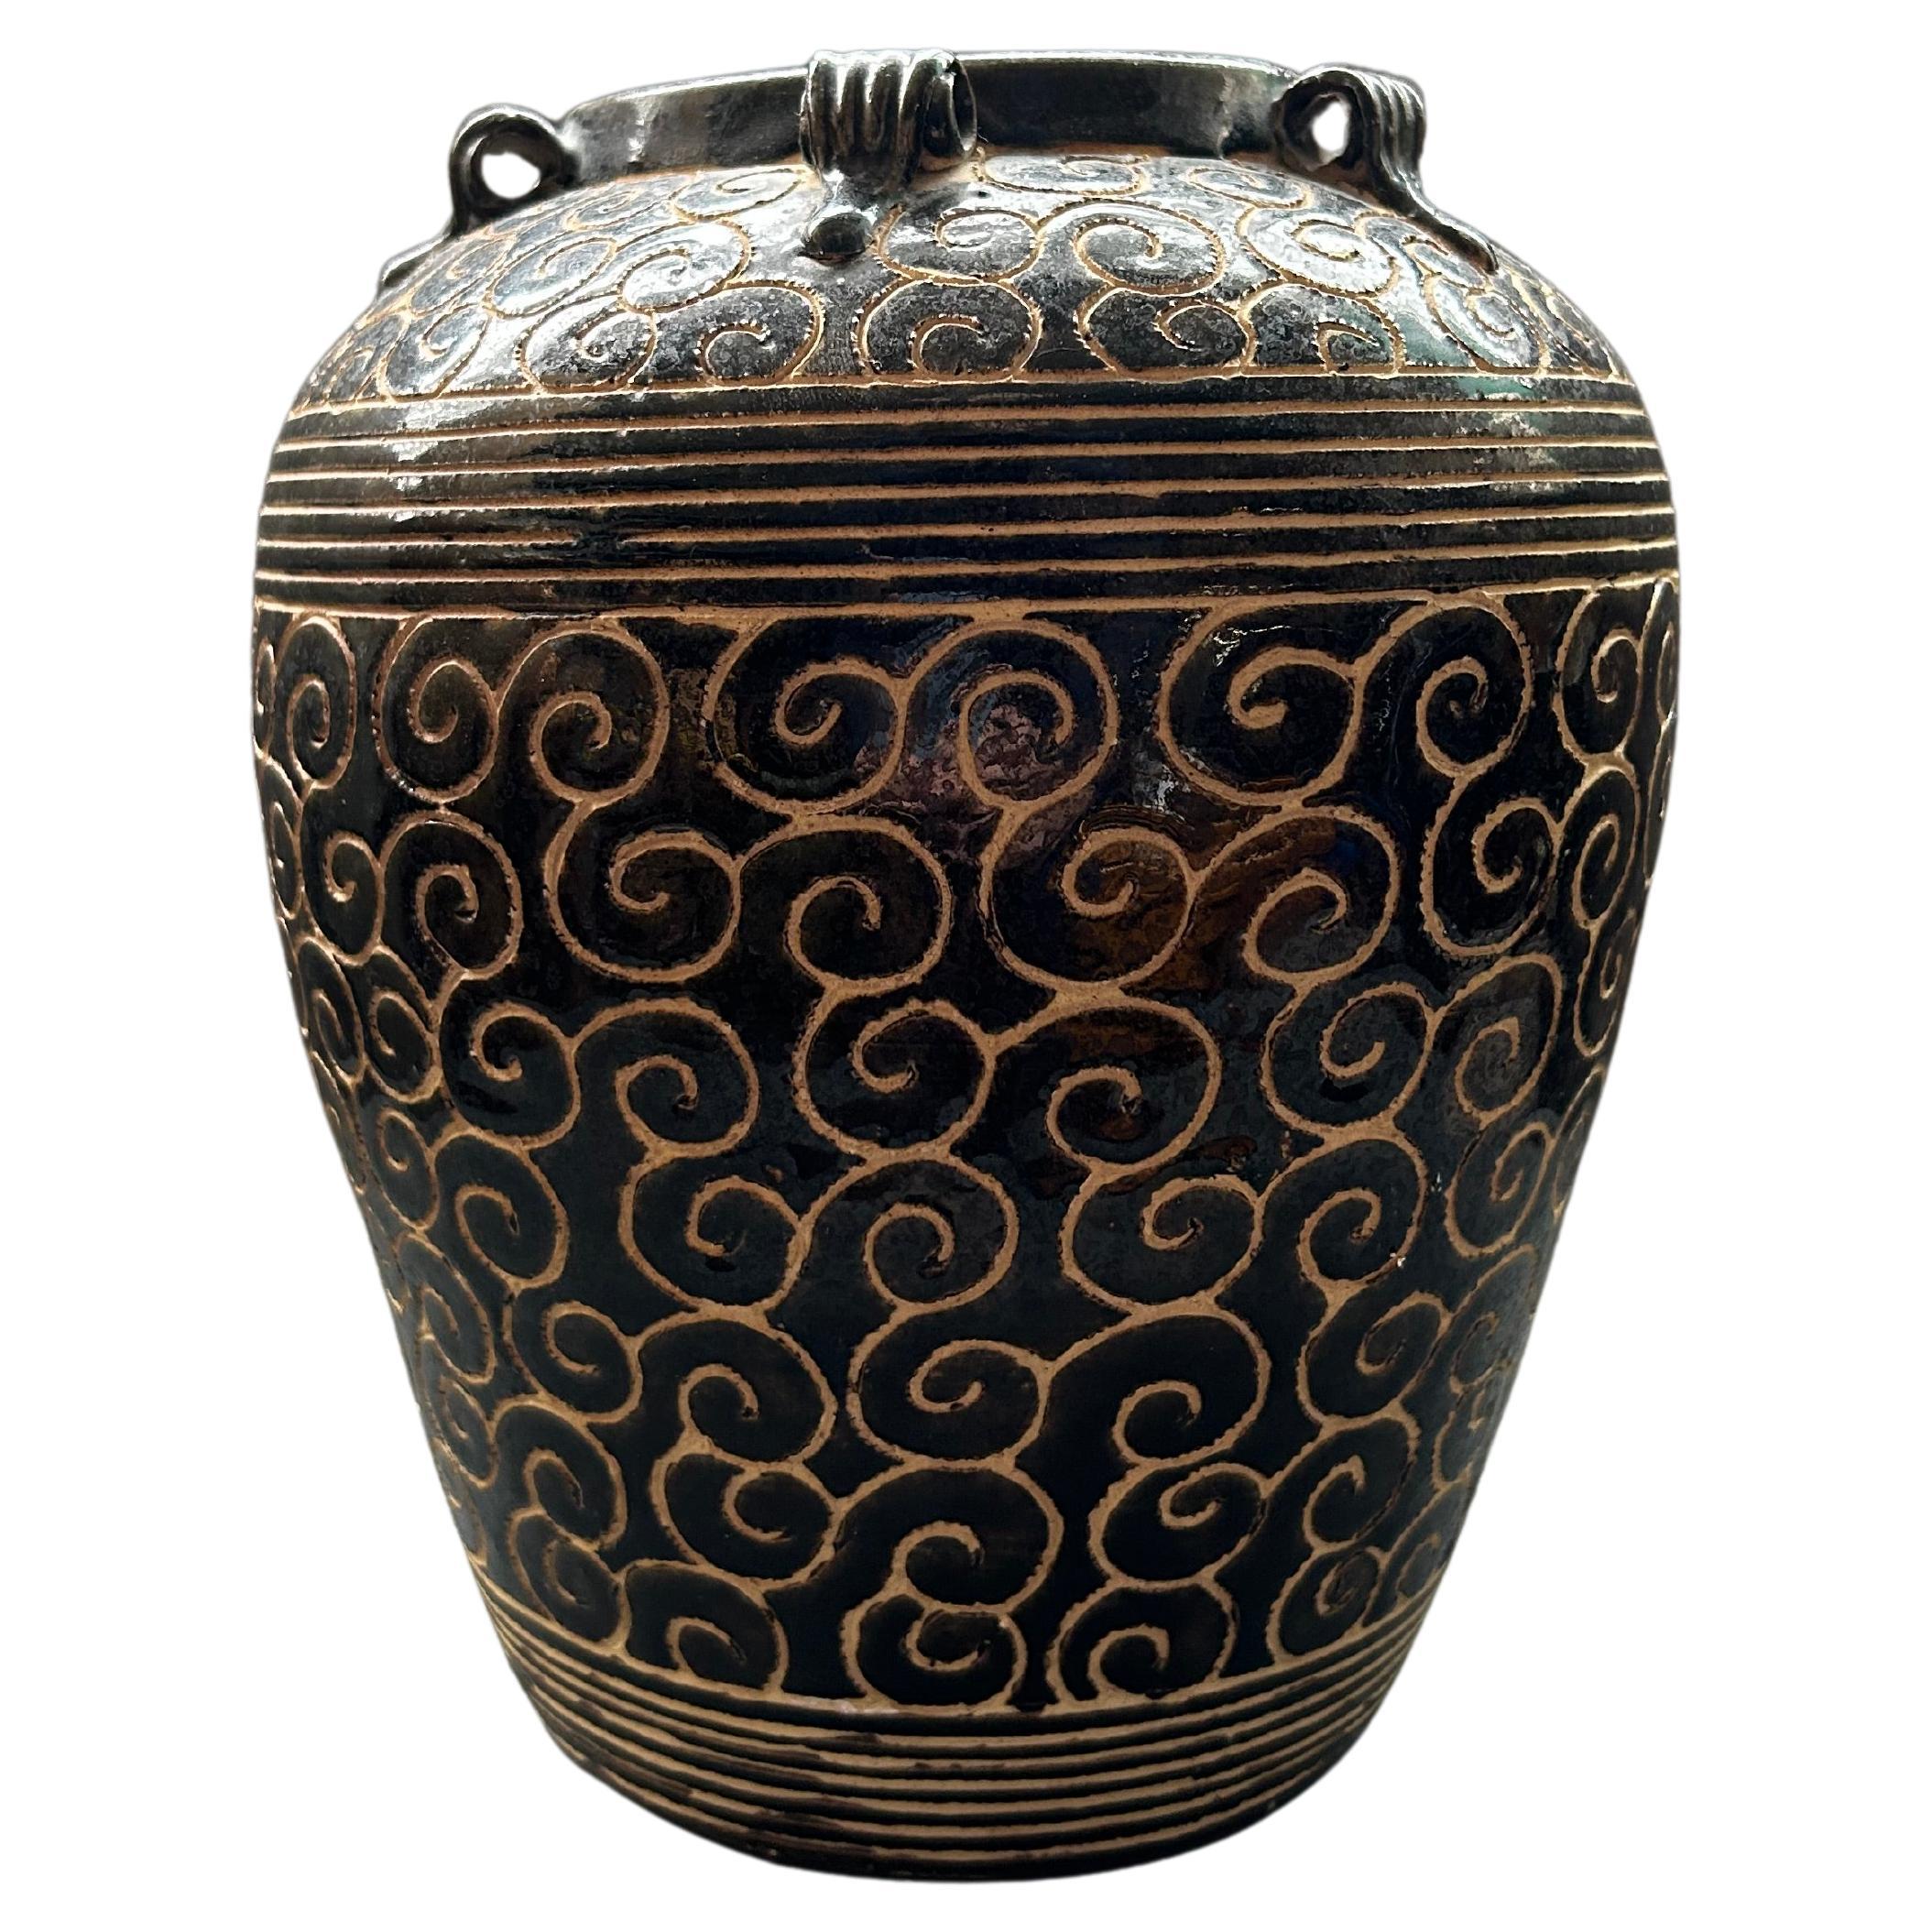 Scandinavian arts and crafts vase